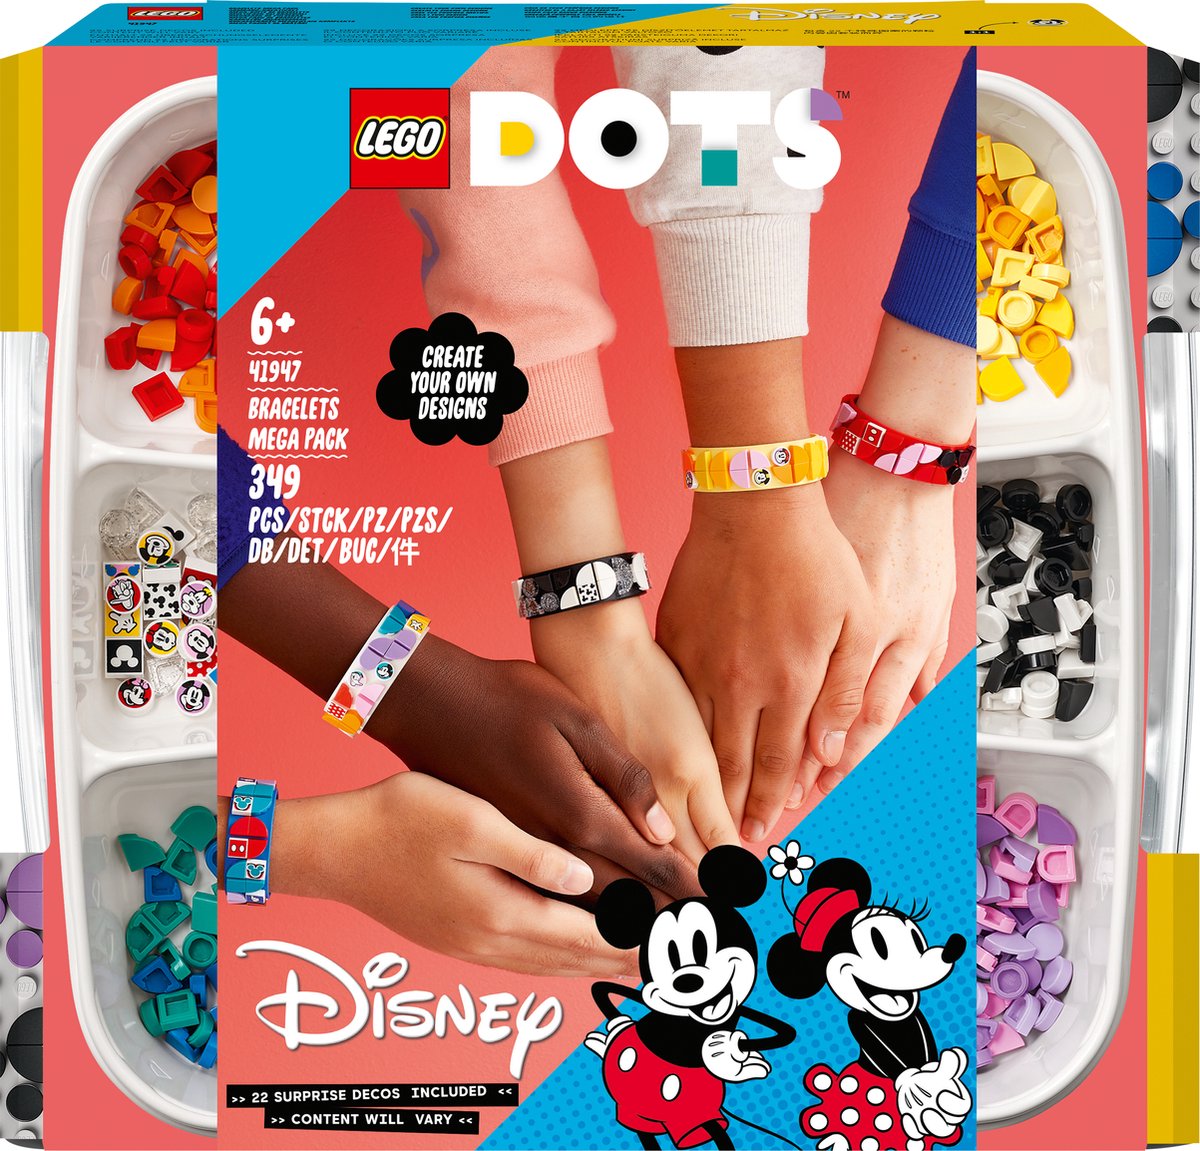   DOTS Mickey & Friends: megapak armbanden - 41947